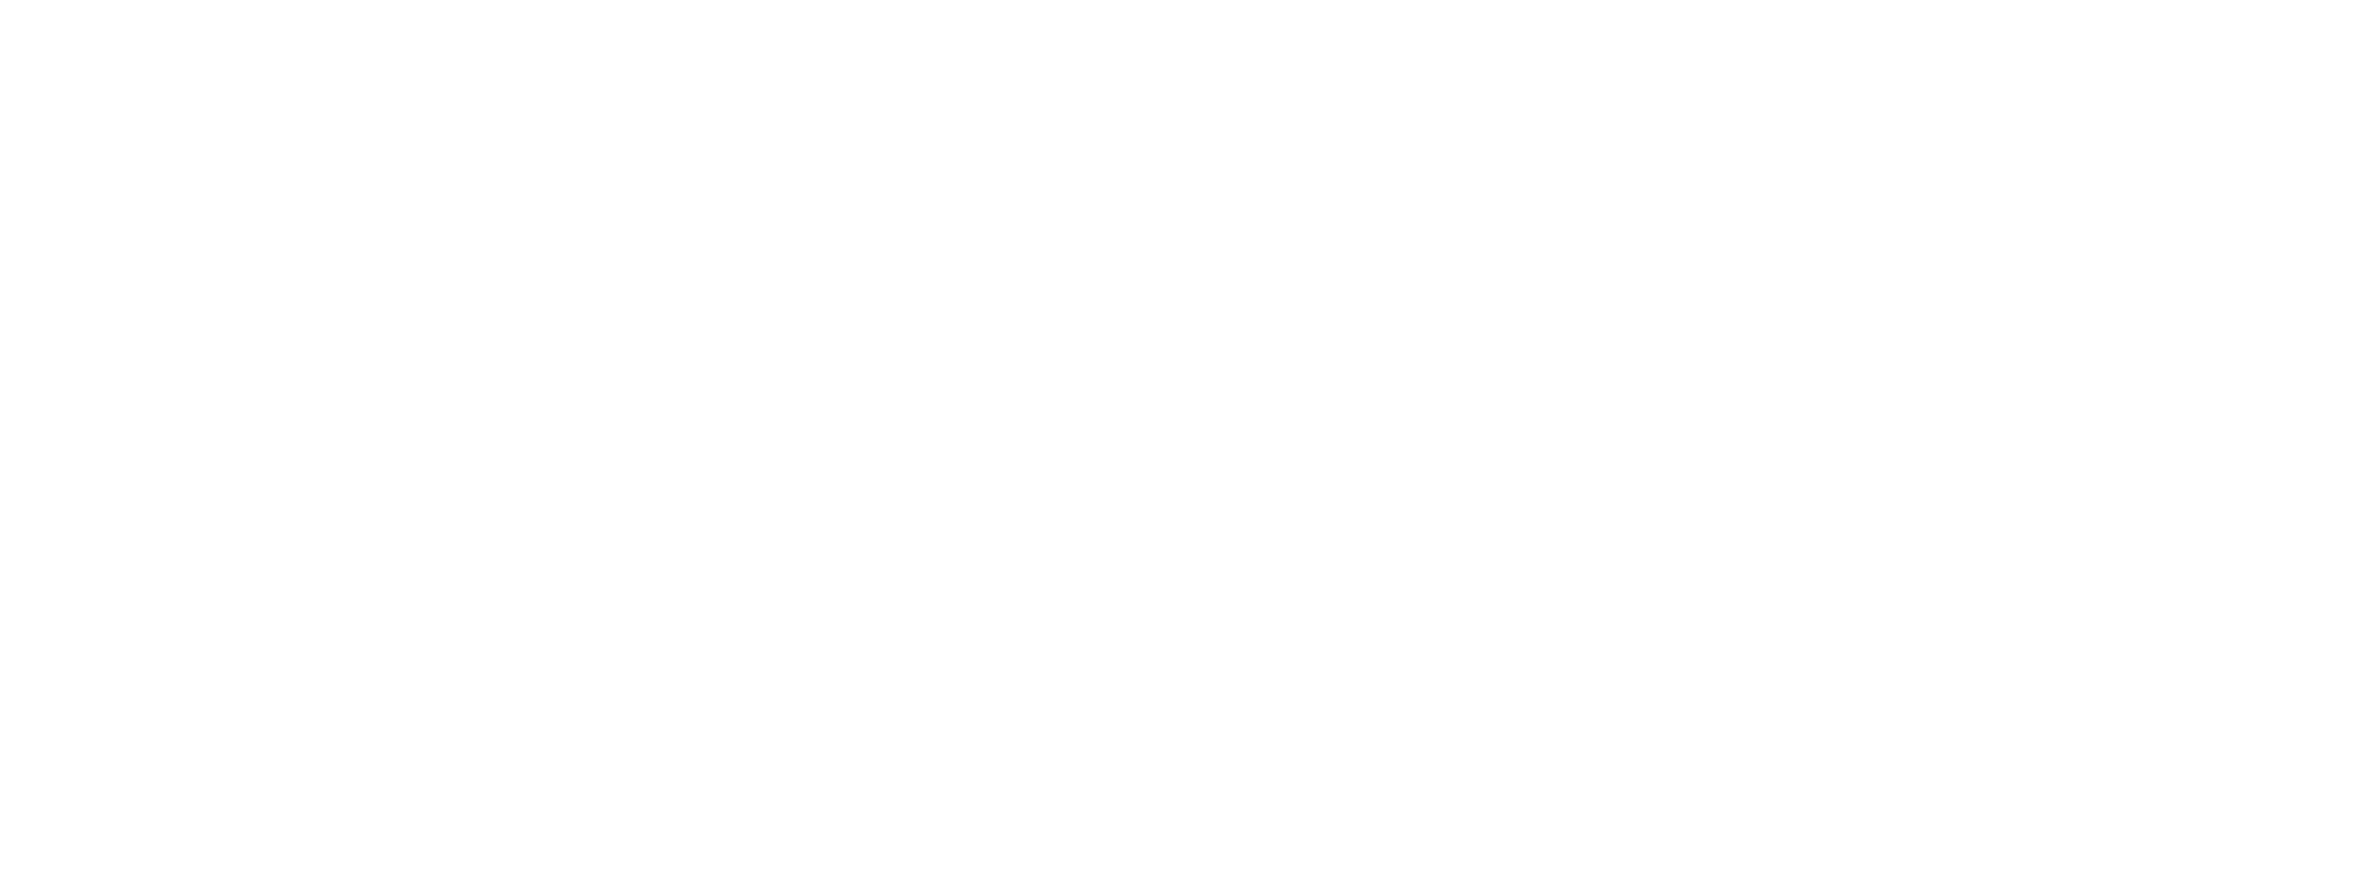 Indonesia Photo Tour